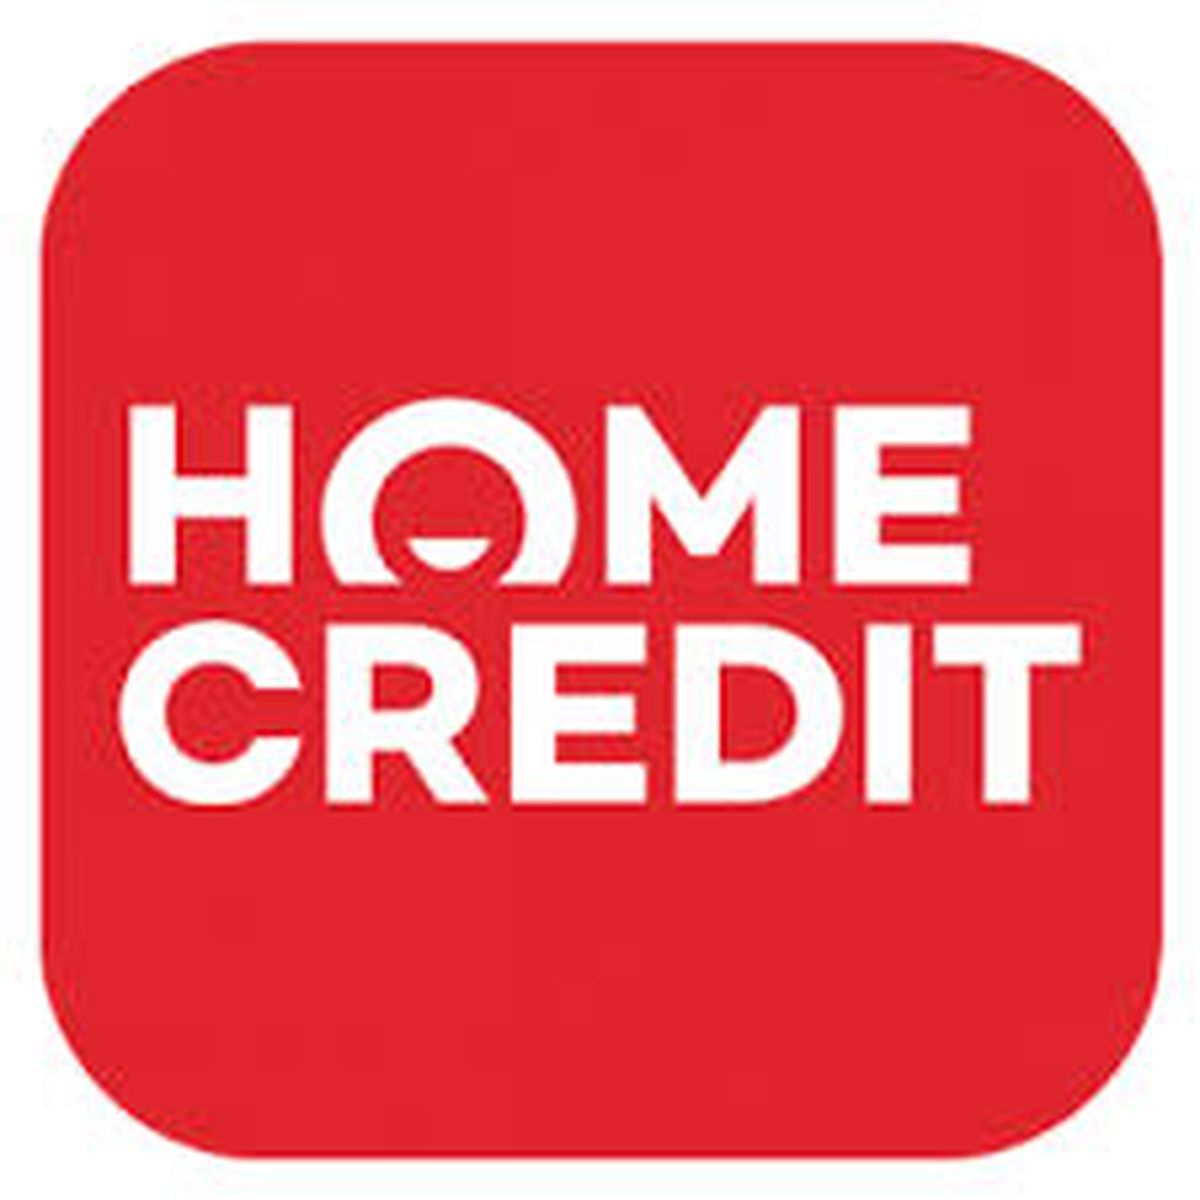 Home credit bank kazakhstan блоггер. Банк Home credit. Хоум кредит лого. Home credit Bank новый логотип. Значок хоум кредит банка.